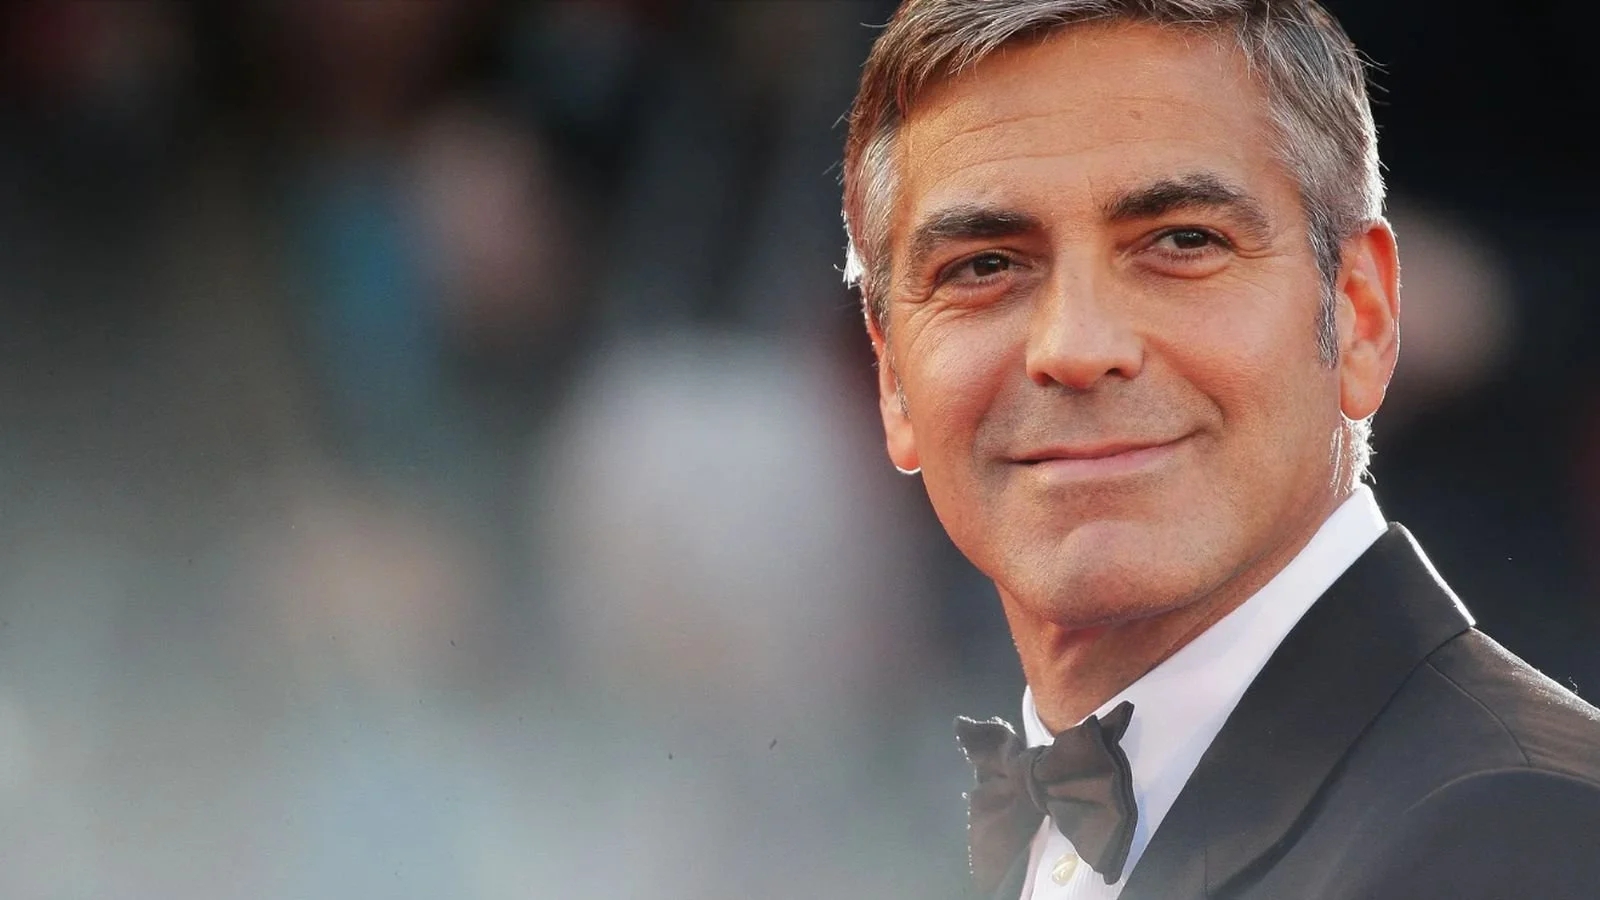 George Clooney: Villa Oleandra is for sale for 107 million dollars